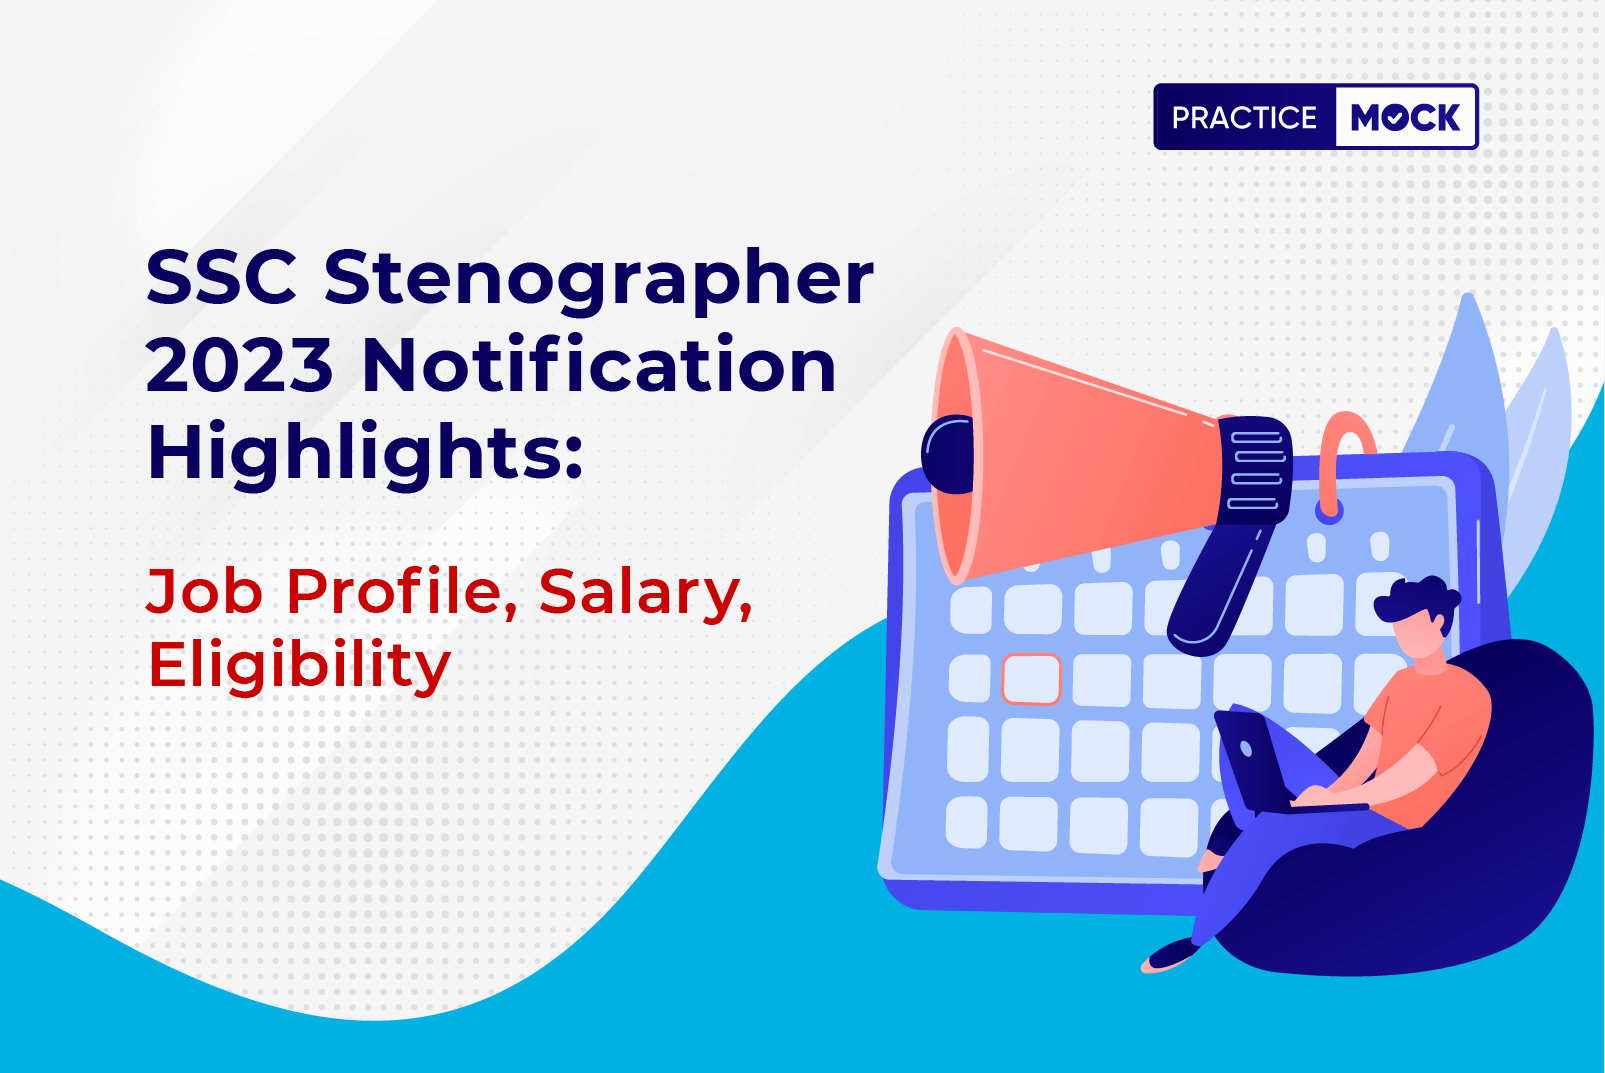 SSC Stenographer 2023 Notification Highlights: Job Profile, Salary, Eligibility